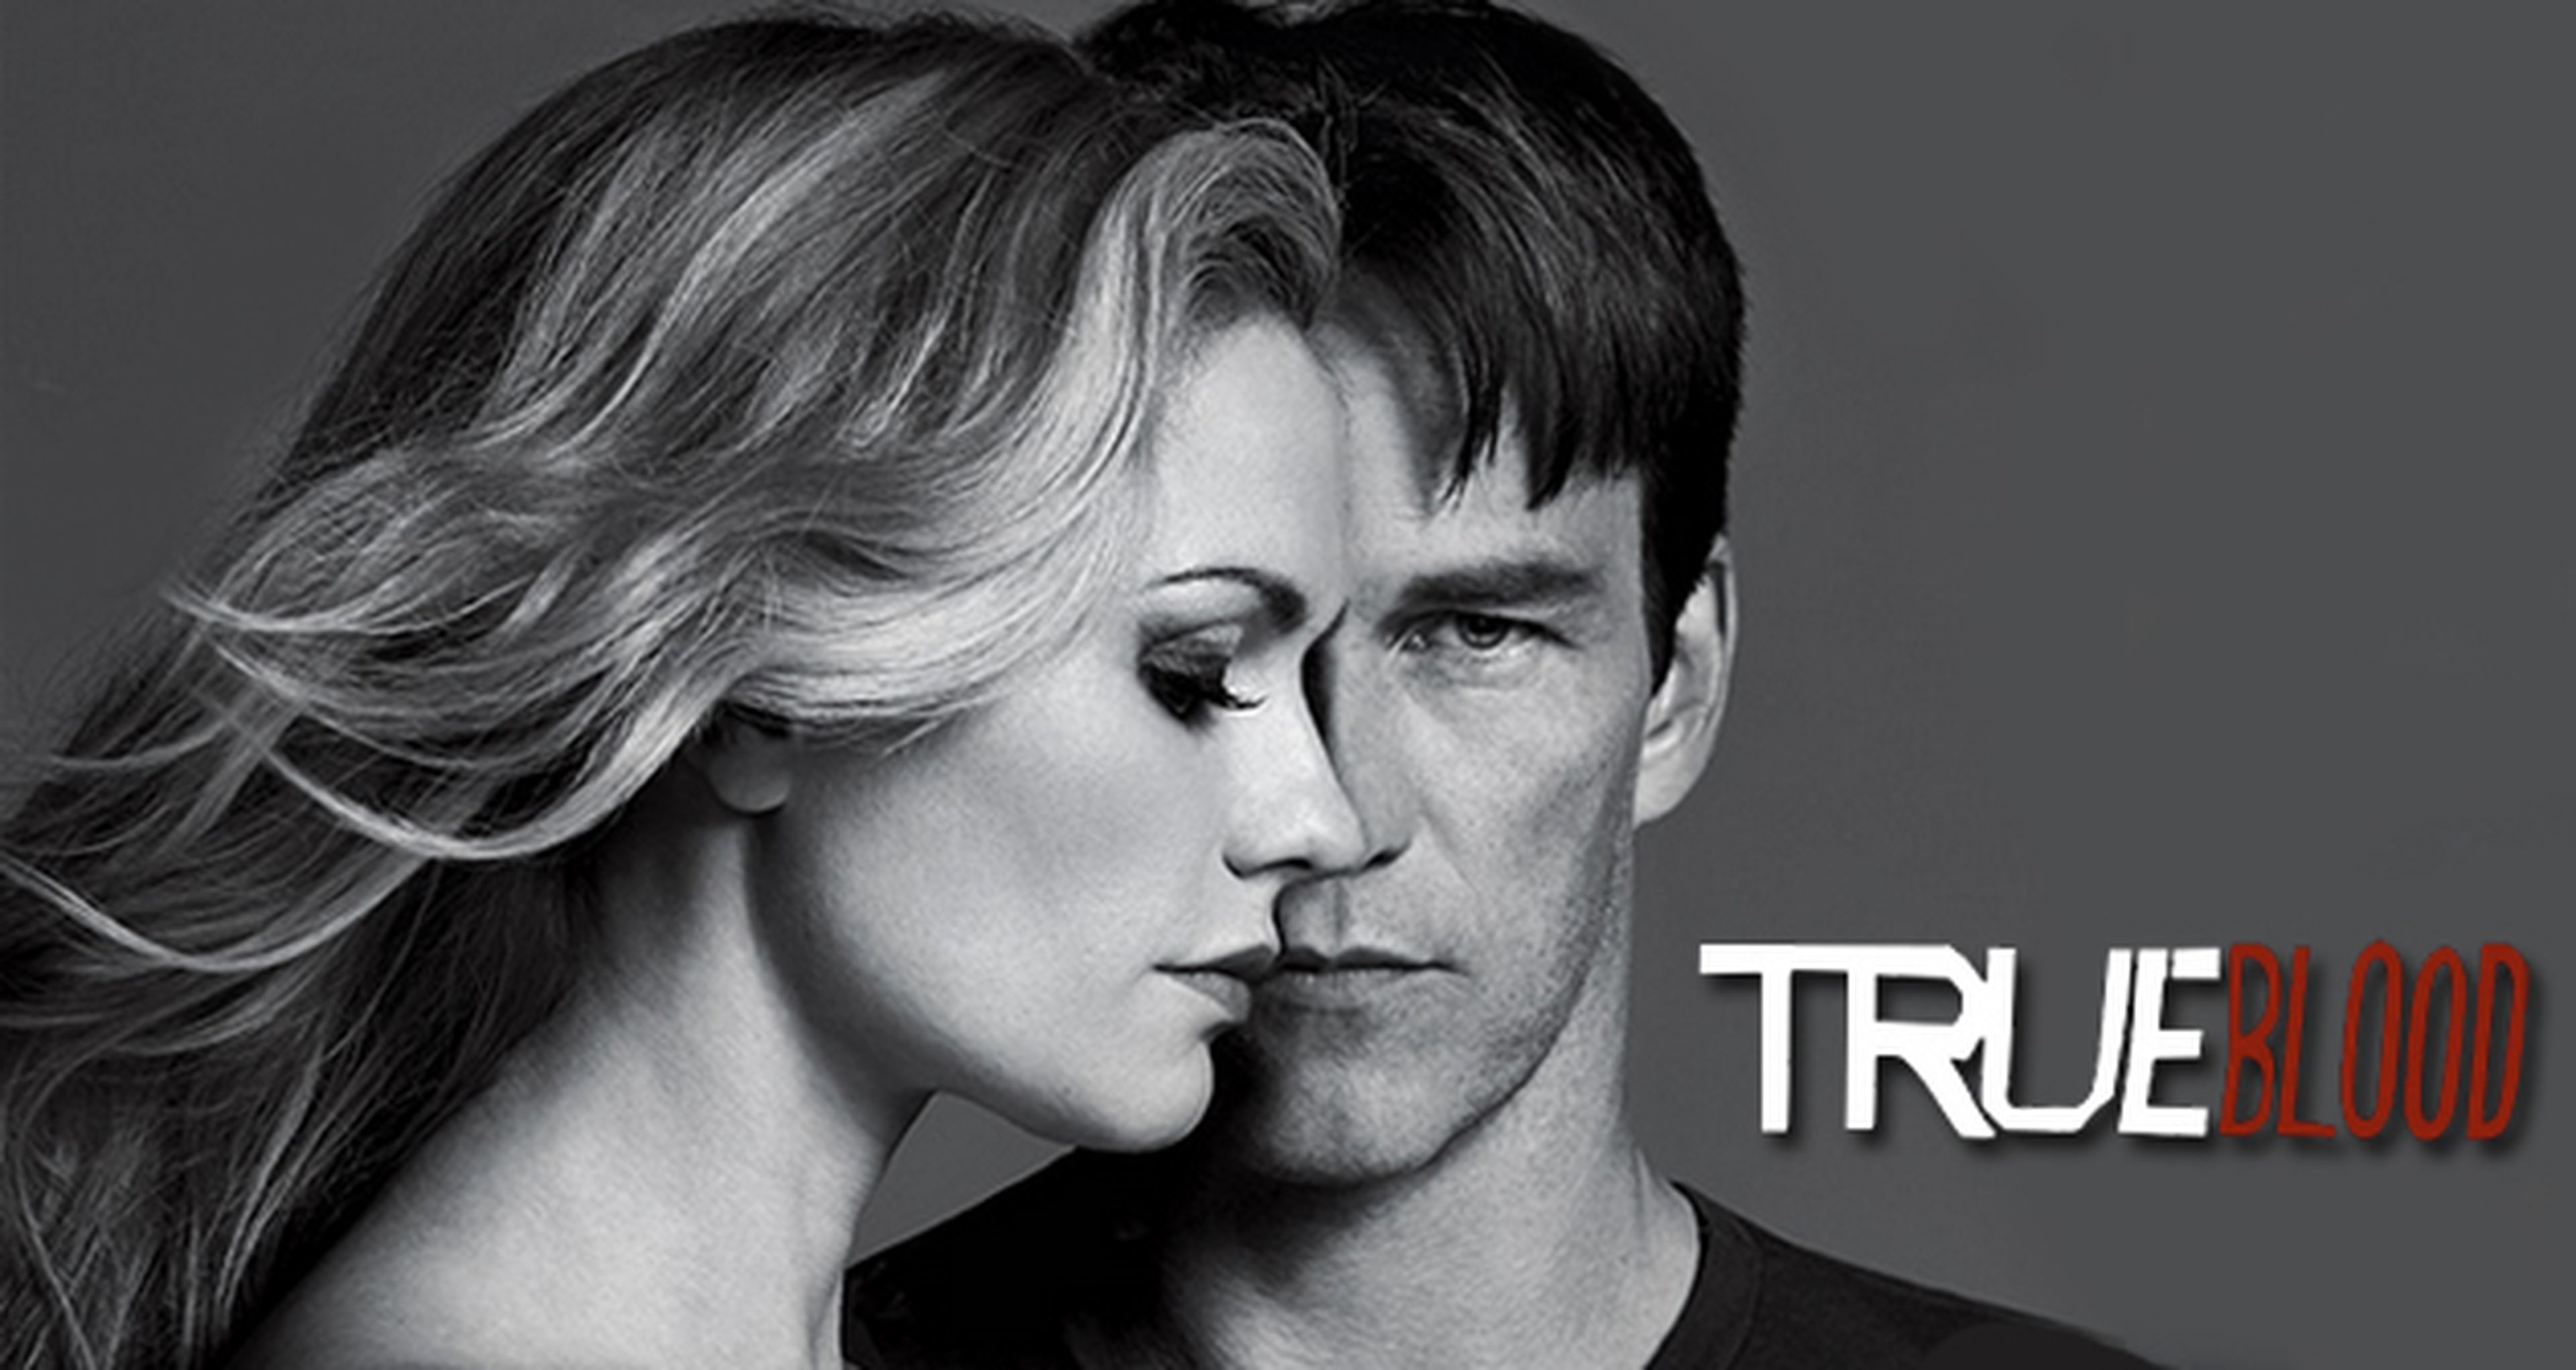 La sexy serie True Blood inicia esta noche su 7ª temporada final